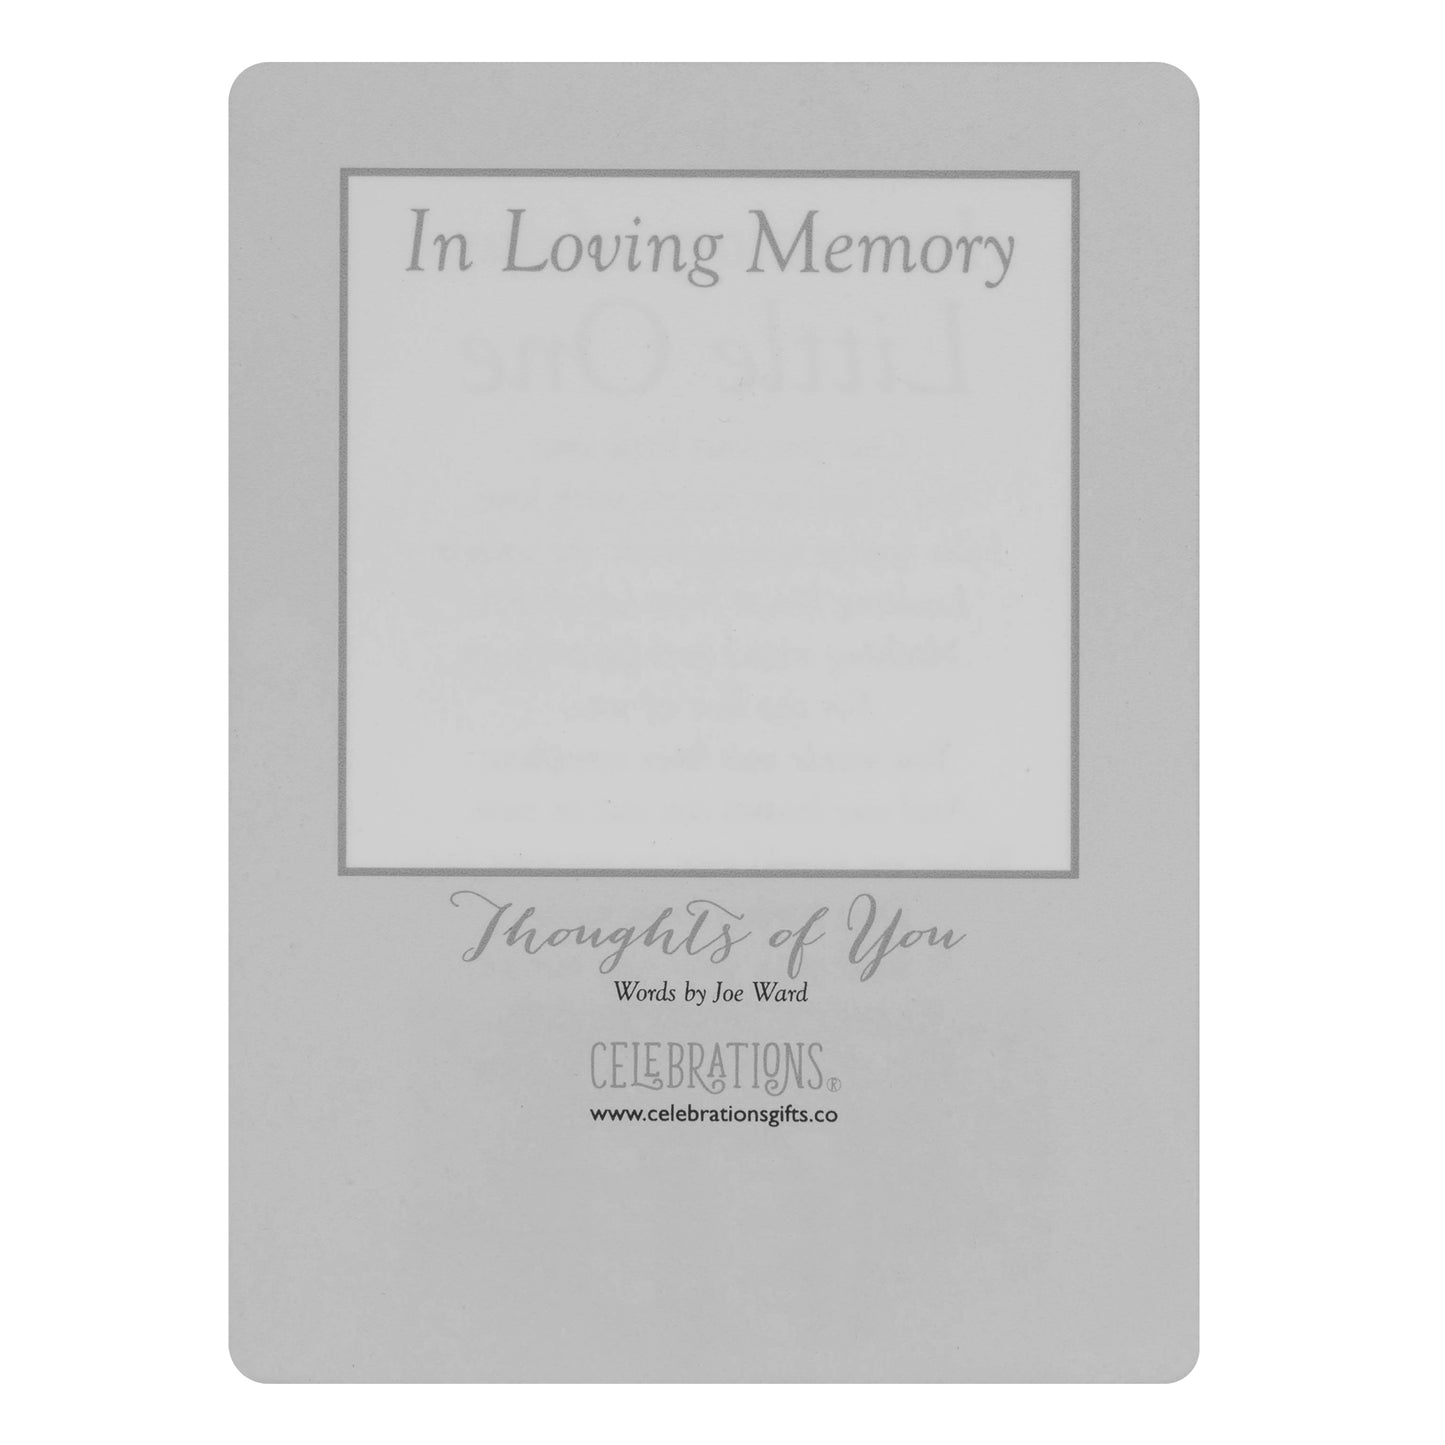 Graveside Memorial Cards - A Golden Heart